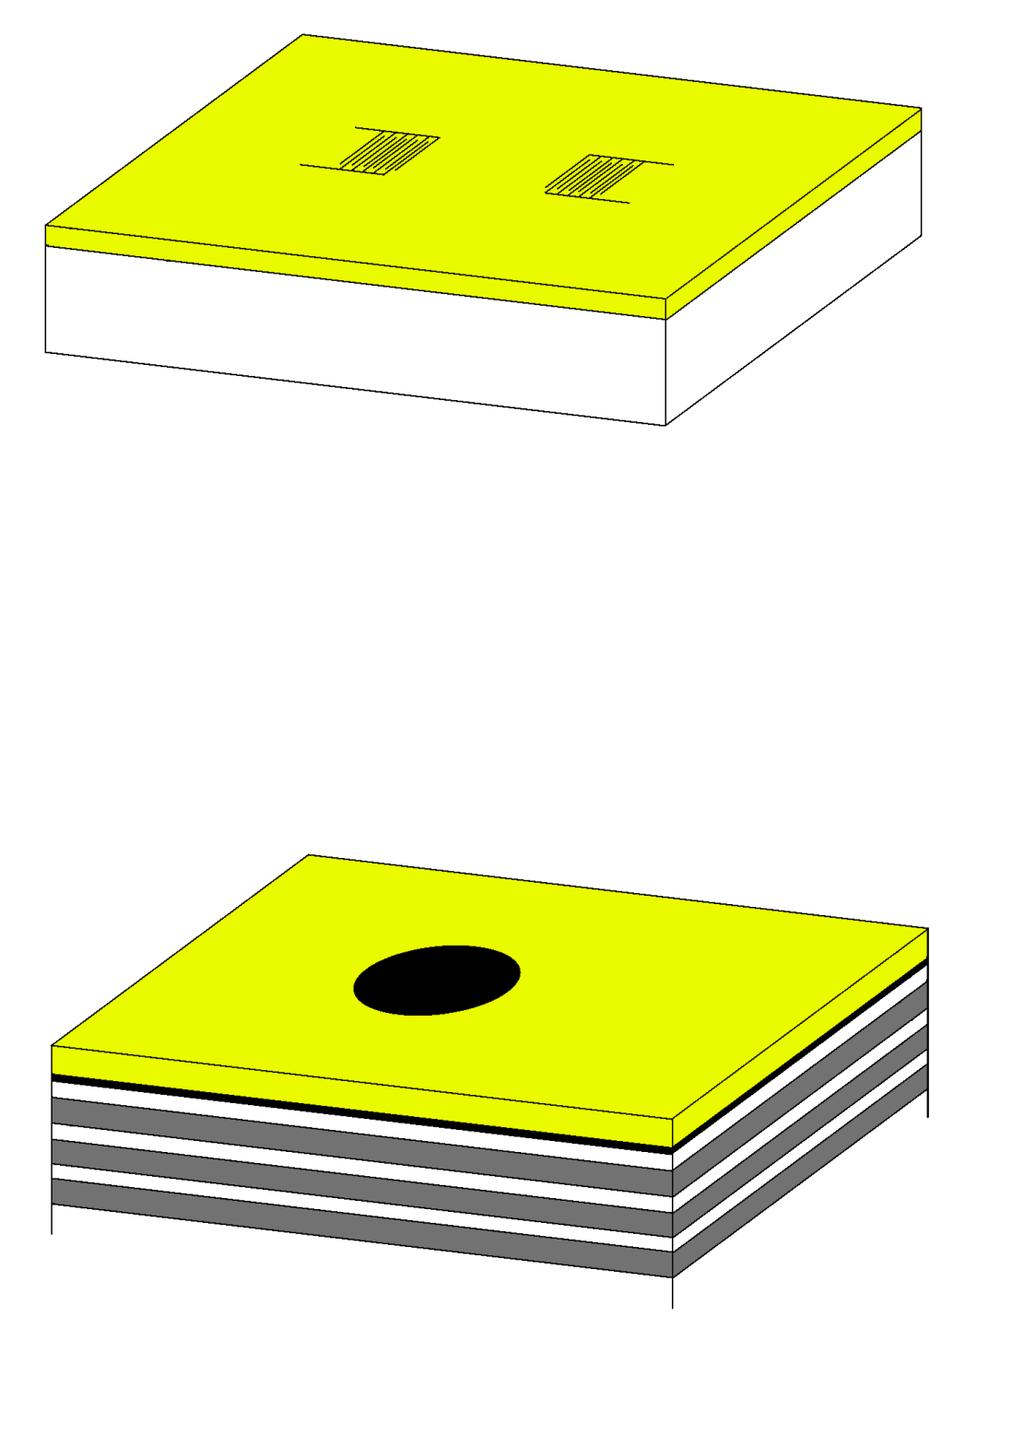 Device Motivation λ IDT linewidth ~ 1 / 4 λ f = v / λ piezoelectric film diamond Surface Acoustic Wave (SAW) Devices -bulk device (single crystal piezoelectric)